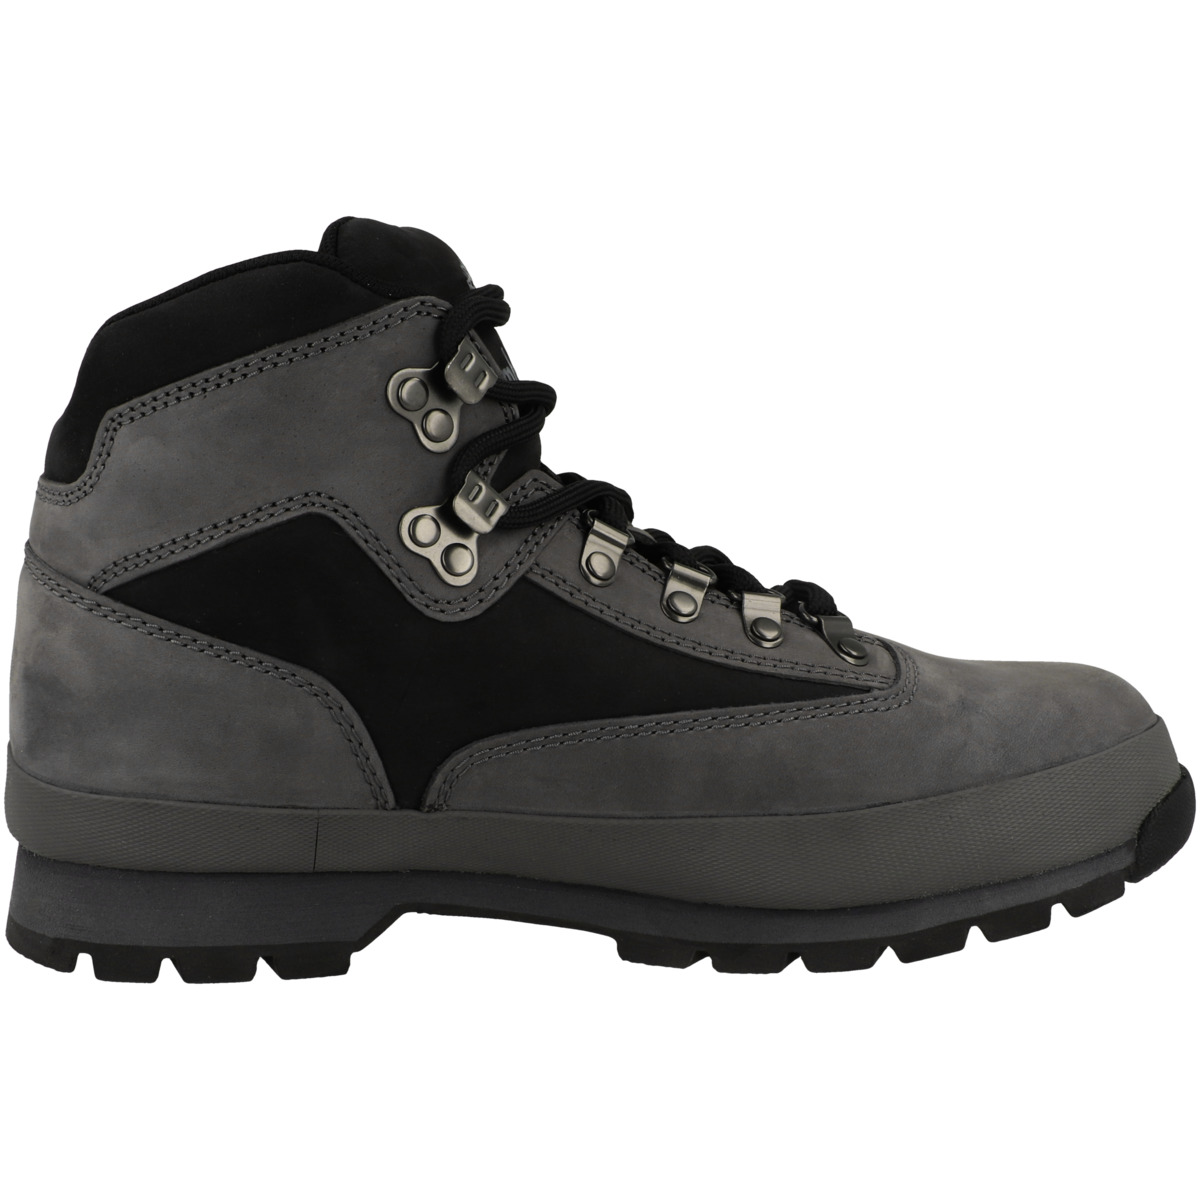 Timberland Euro Hiker Leather Boots grau